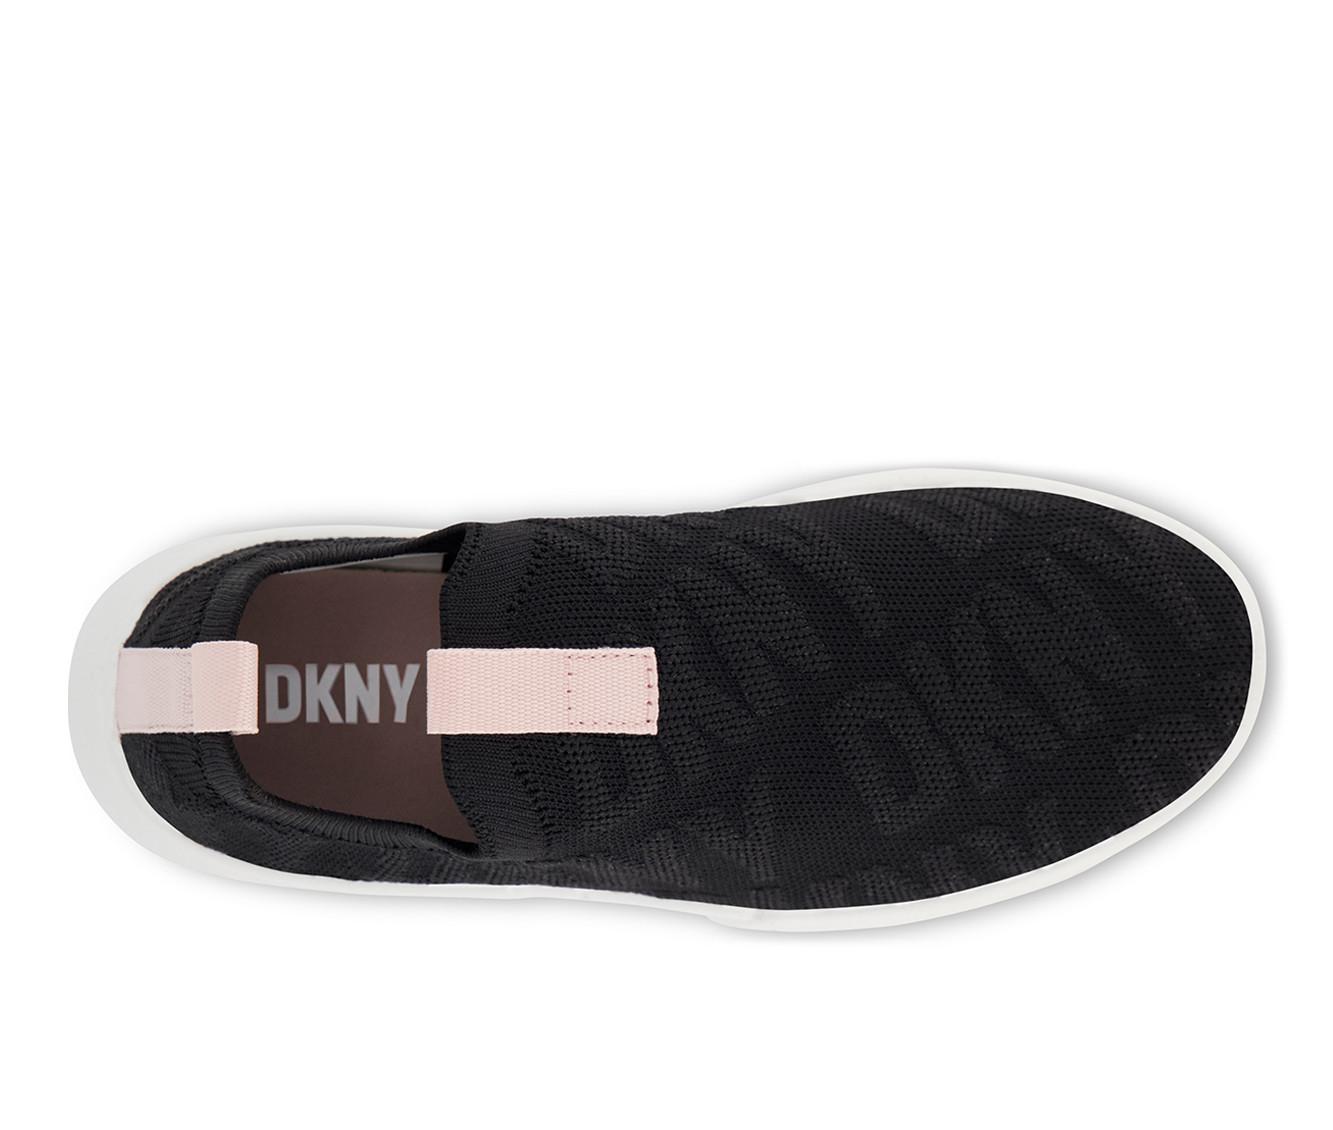 Girls' DKNY Little & Big Kid Mia Rose Slip On Sneakers